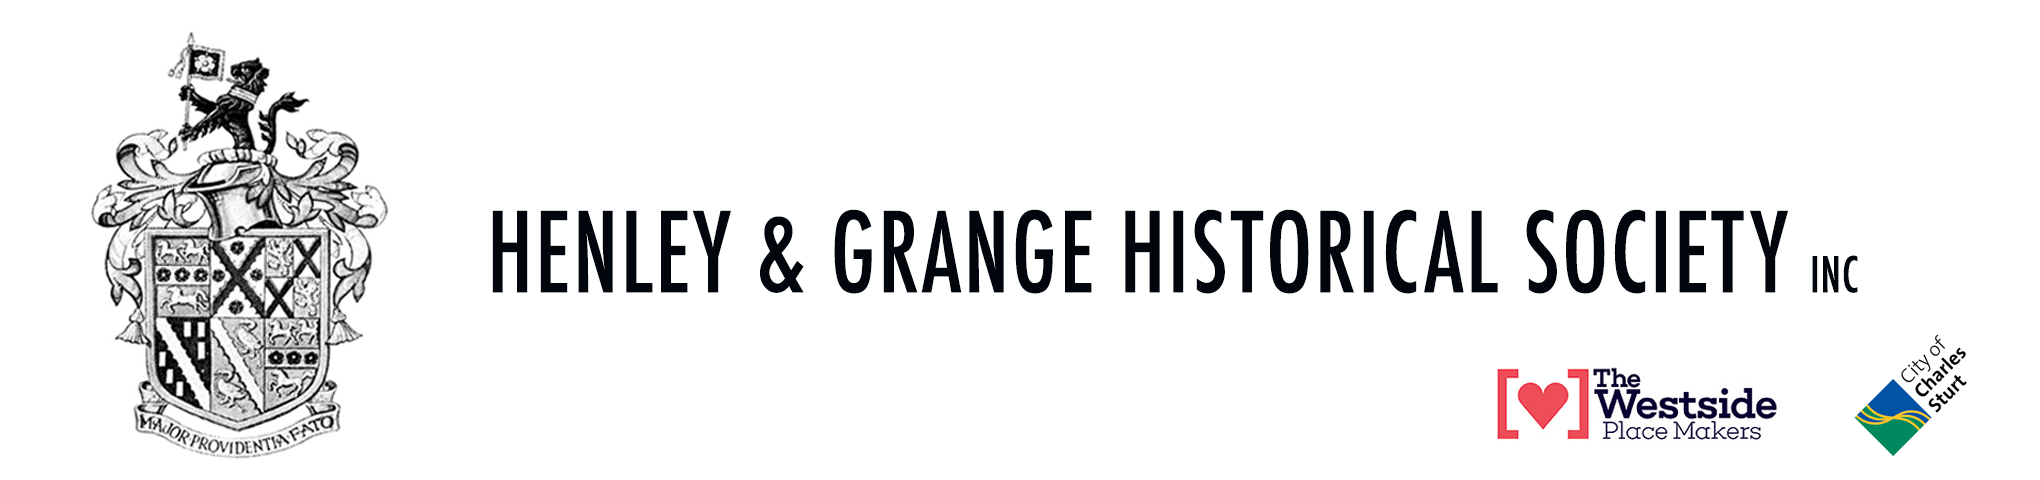 Henley & Grange Historical Society